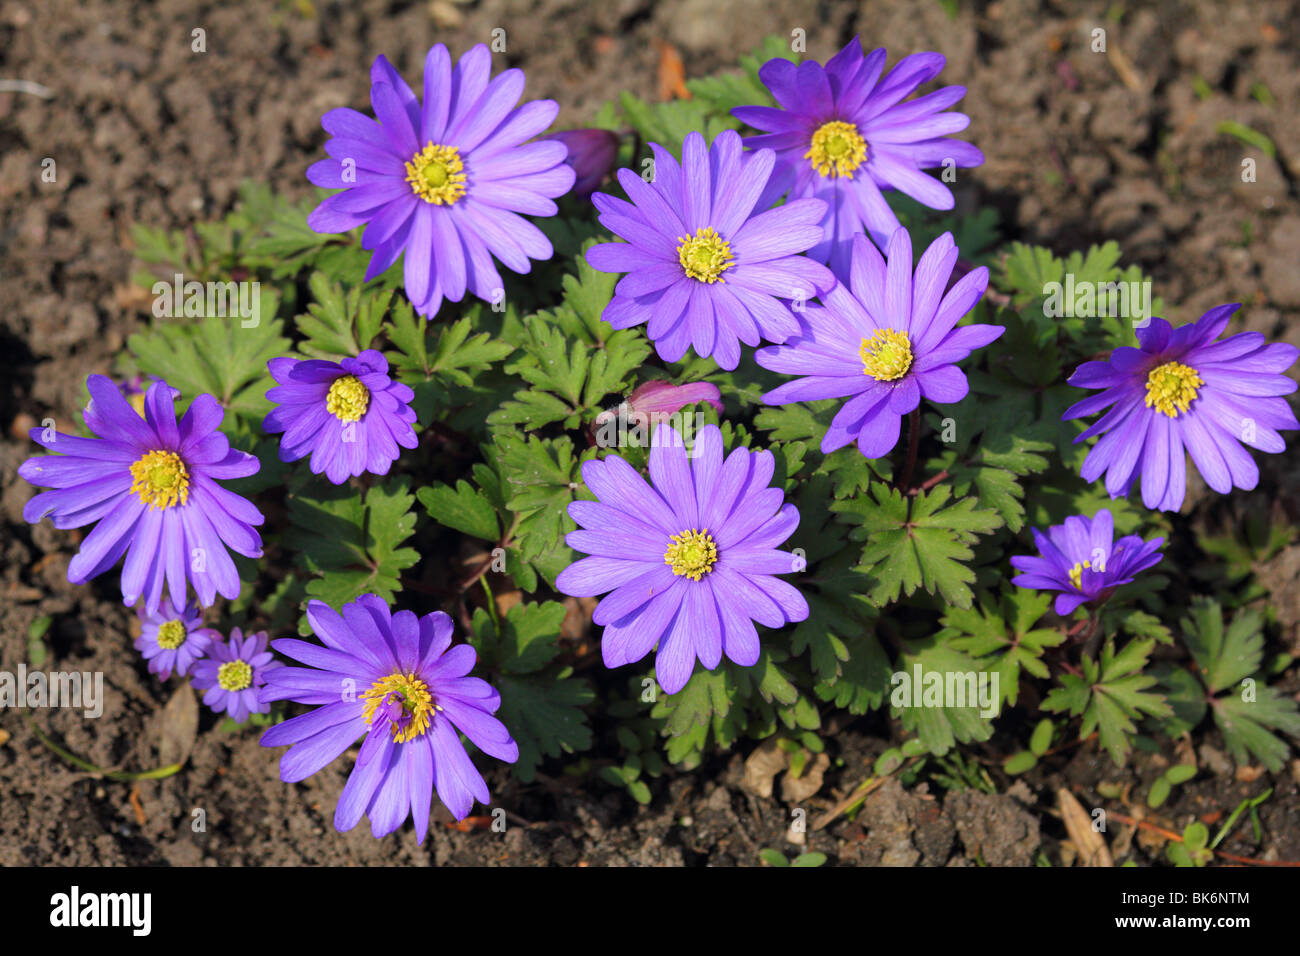 Violette Frühlingsblumen Anemone hautnah Anemone blanda Stockfotografie -  Alamy